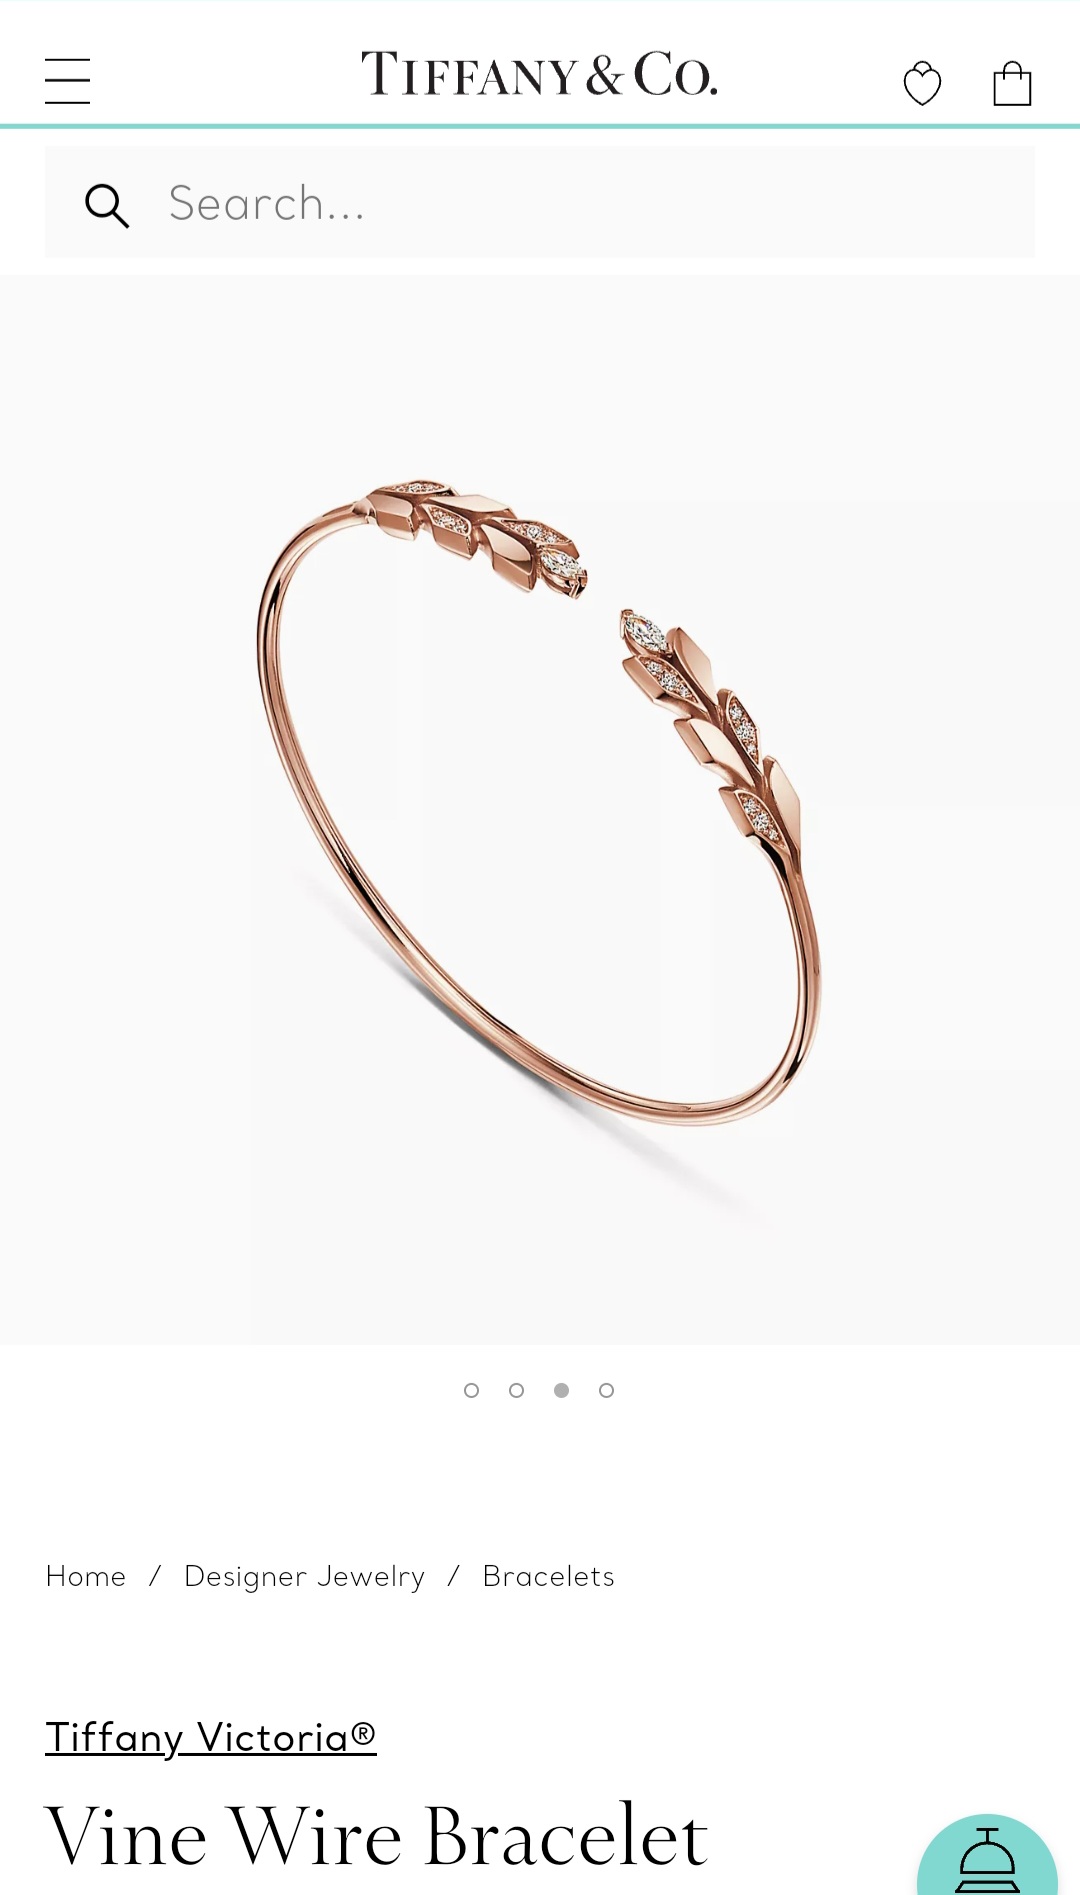 Tiffany & co Victoria Vine Wire Bracelet